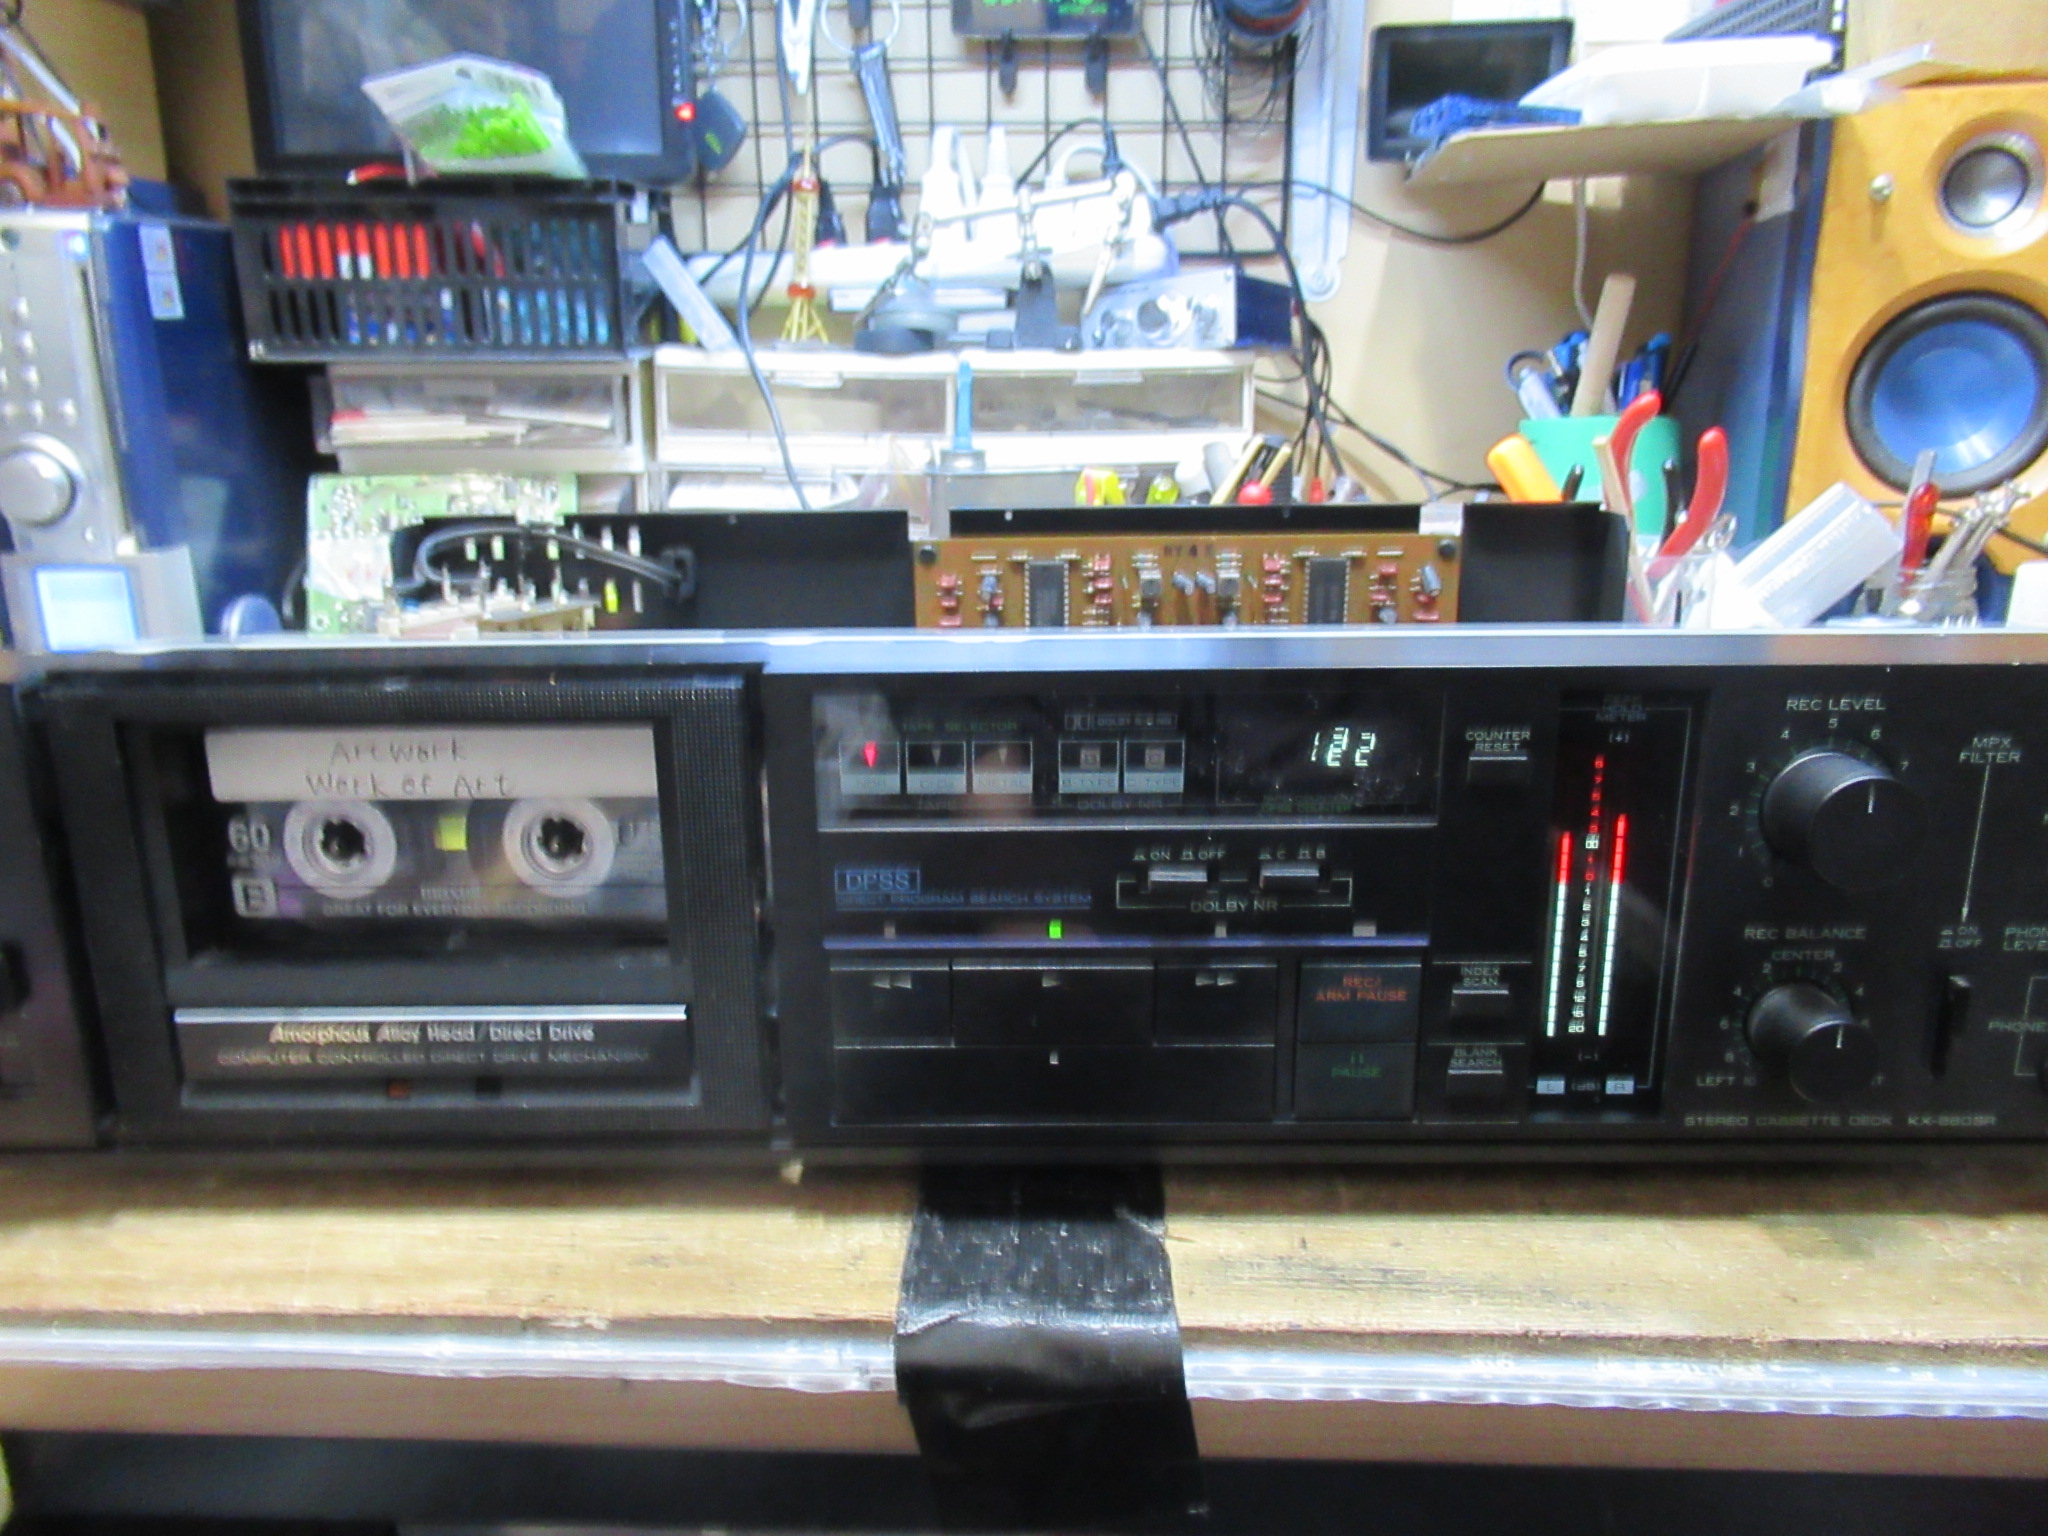 TRIO KX-880SR – Audiolife － Enjoy your audio life!!